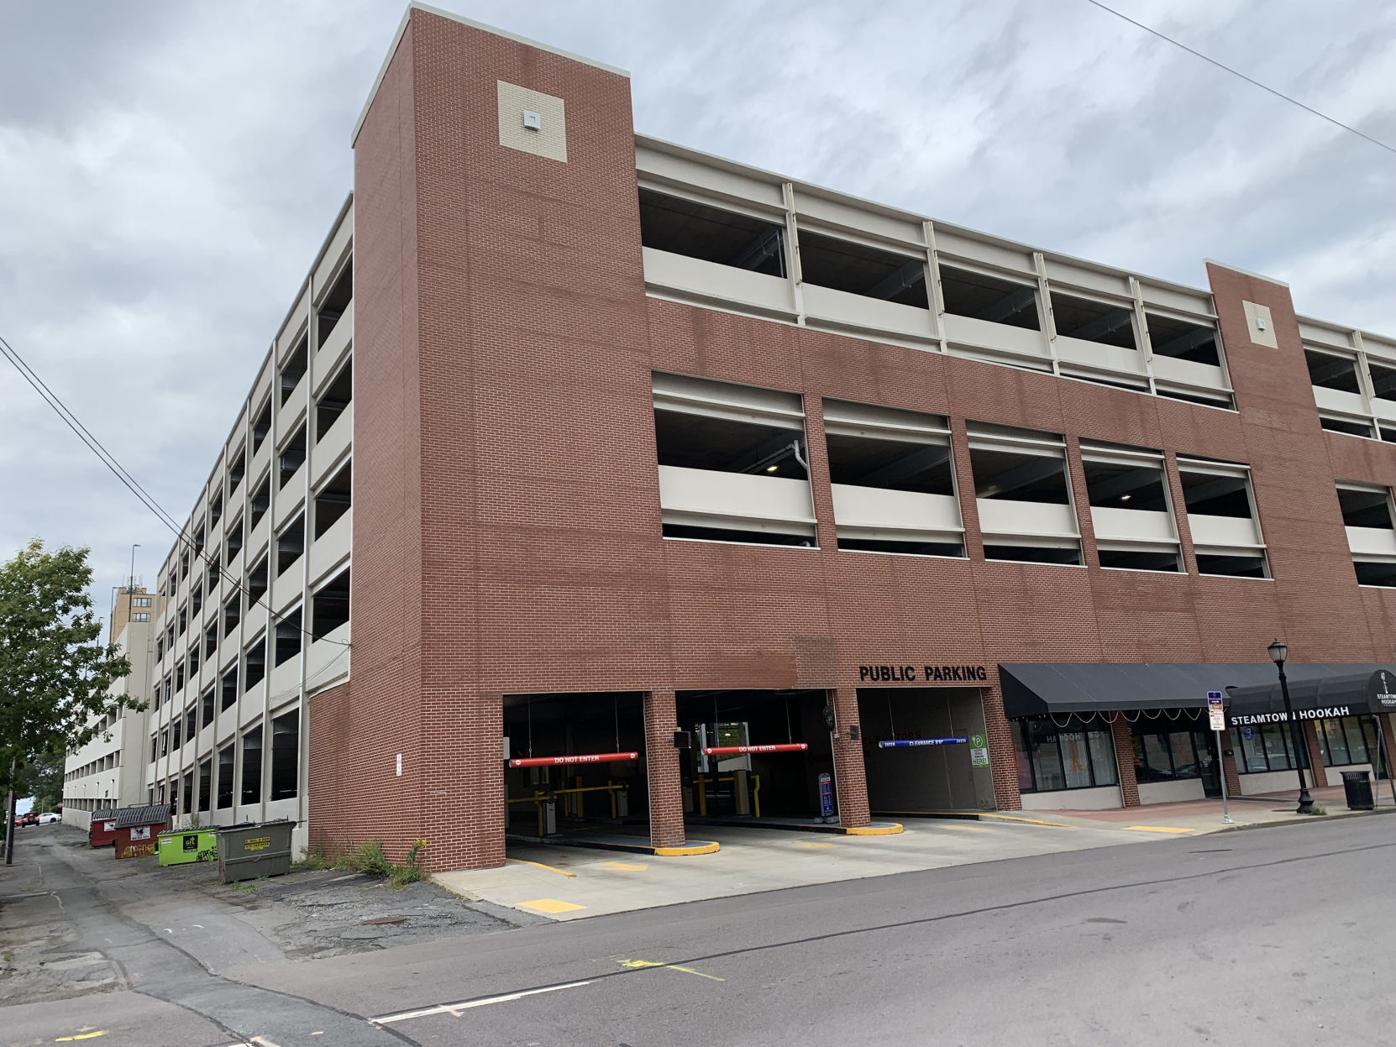 Construction worker hurt in Scranton parking garage sues for negligence